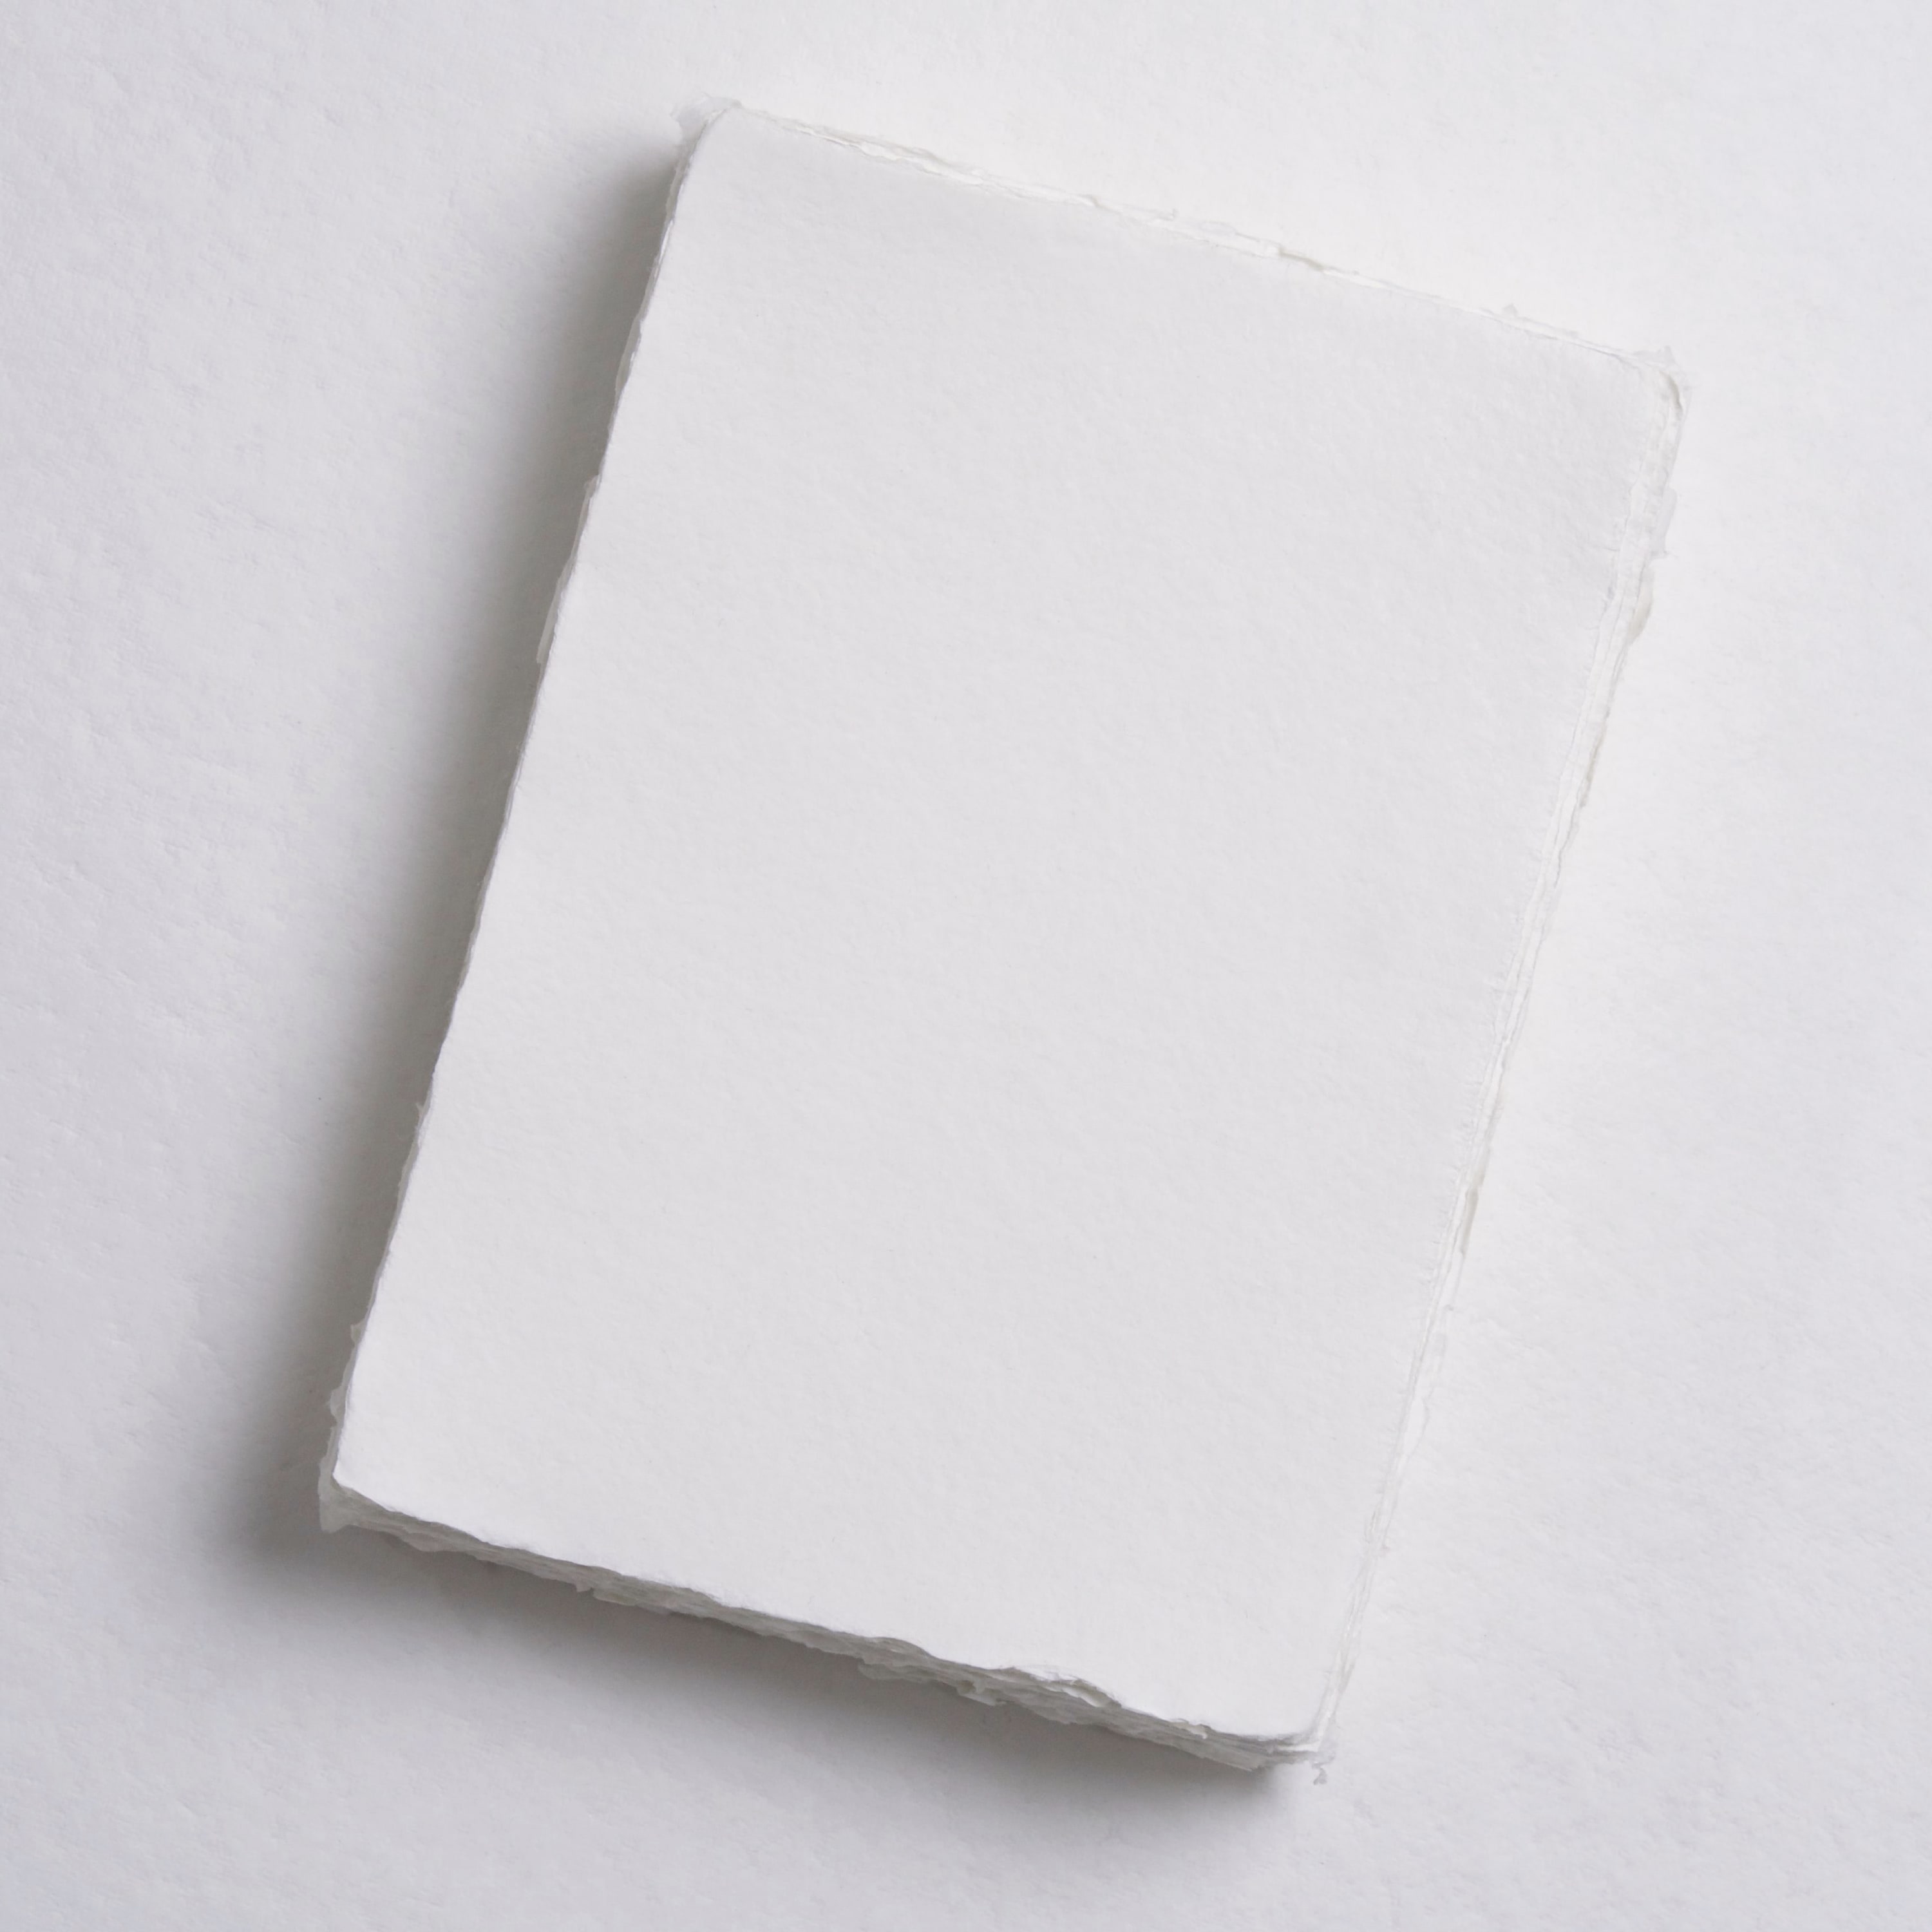 White, A5, 200 gsm – Deckle edge paper – Indian Cotton Paper Co.